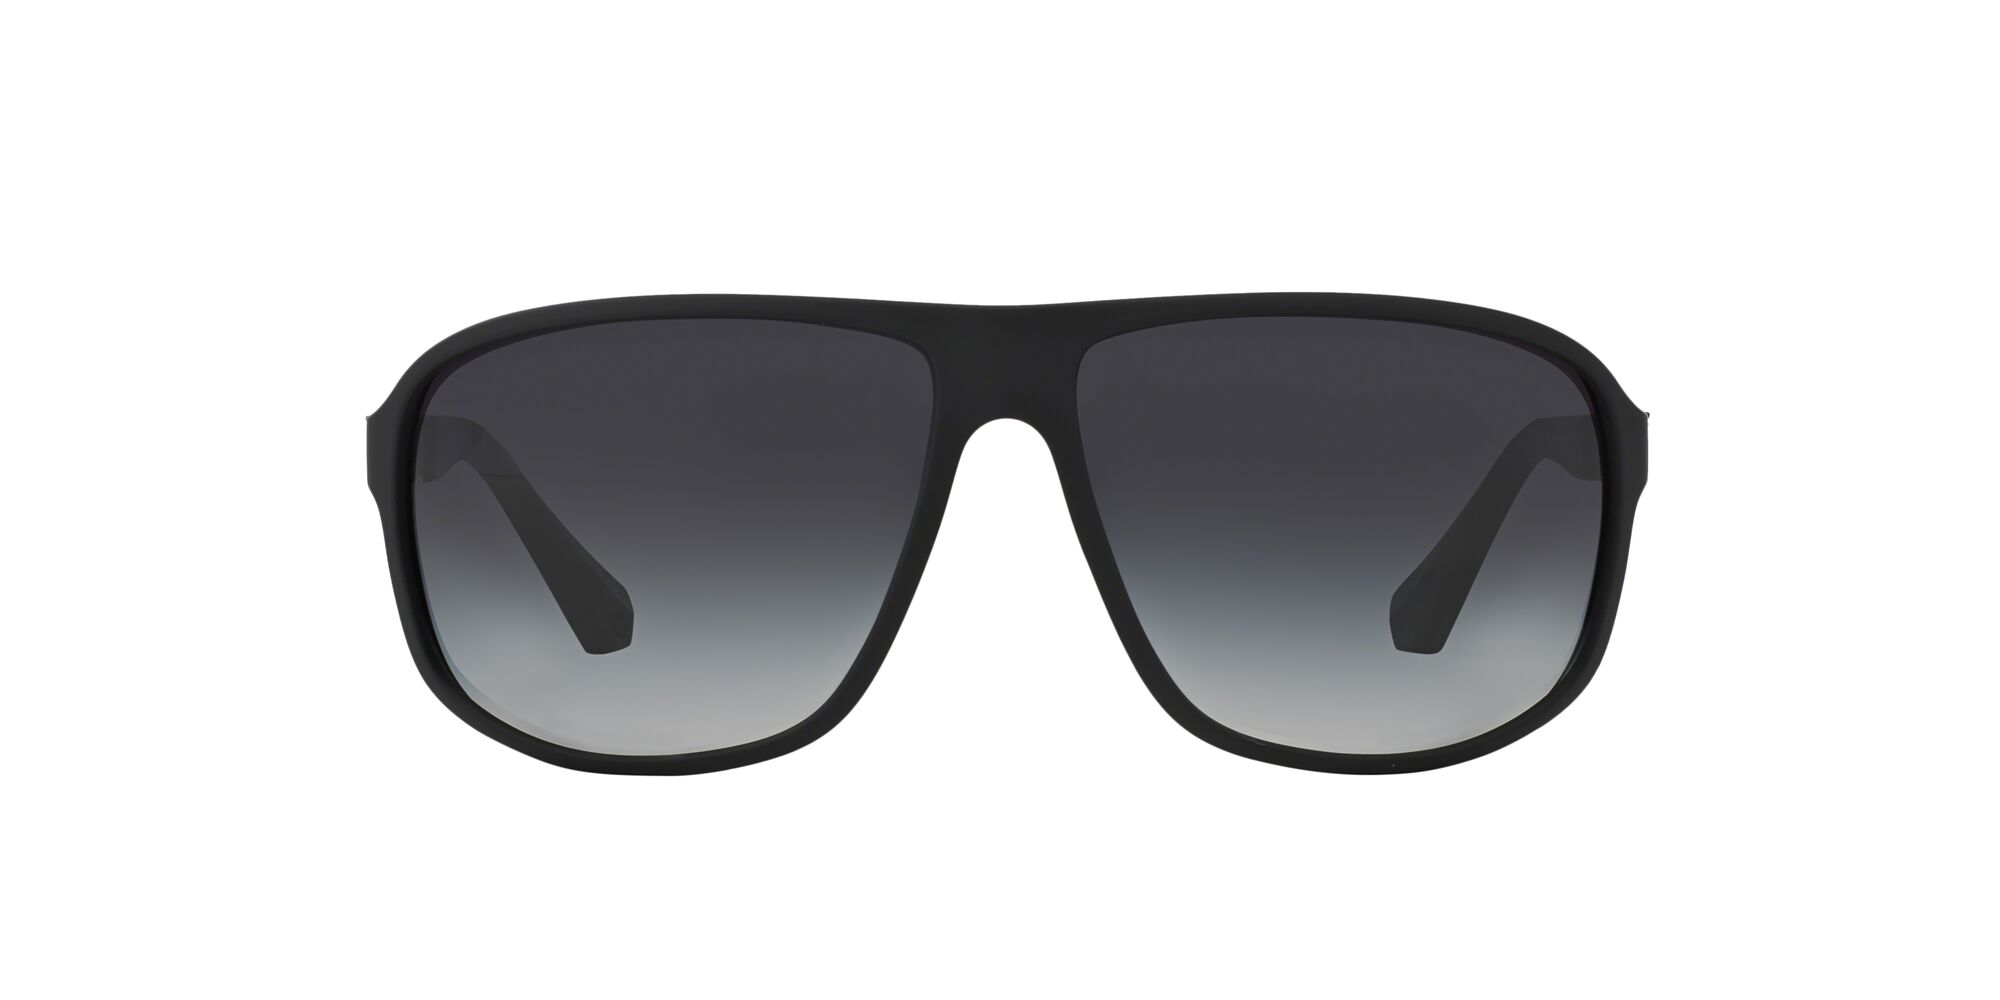 Accessoires Sonnenbrillen eckige Sonnenbrillen Gelbe Armani Sonnenbrille Trend der Anfang 2000er 